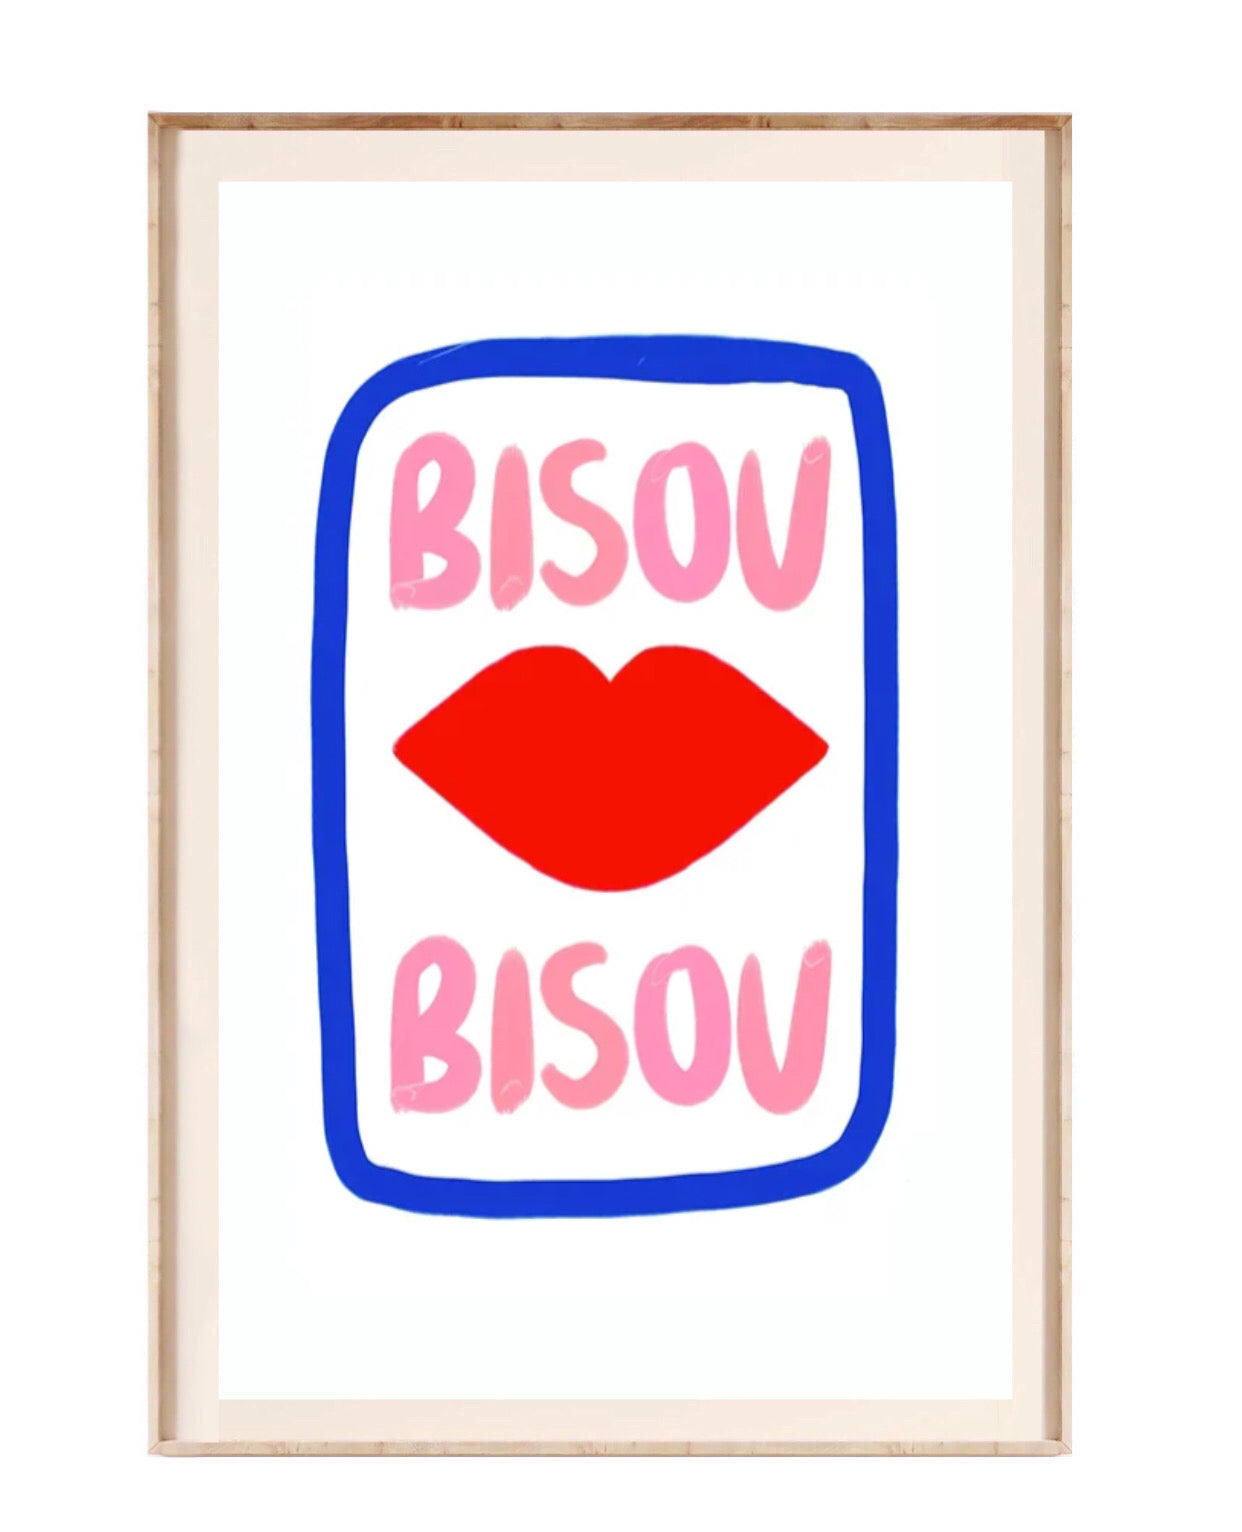 "bisou bisou " poster